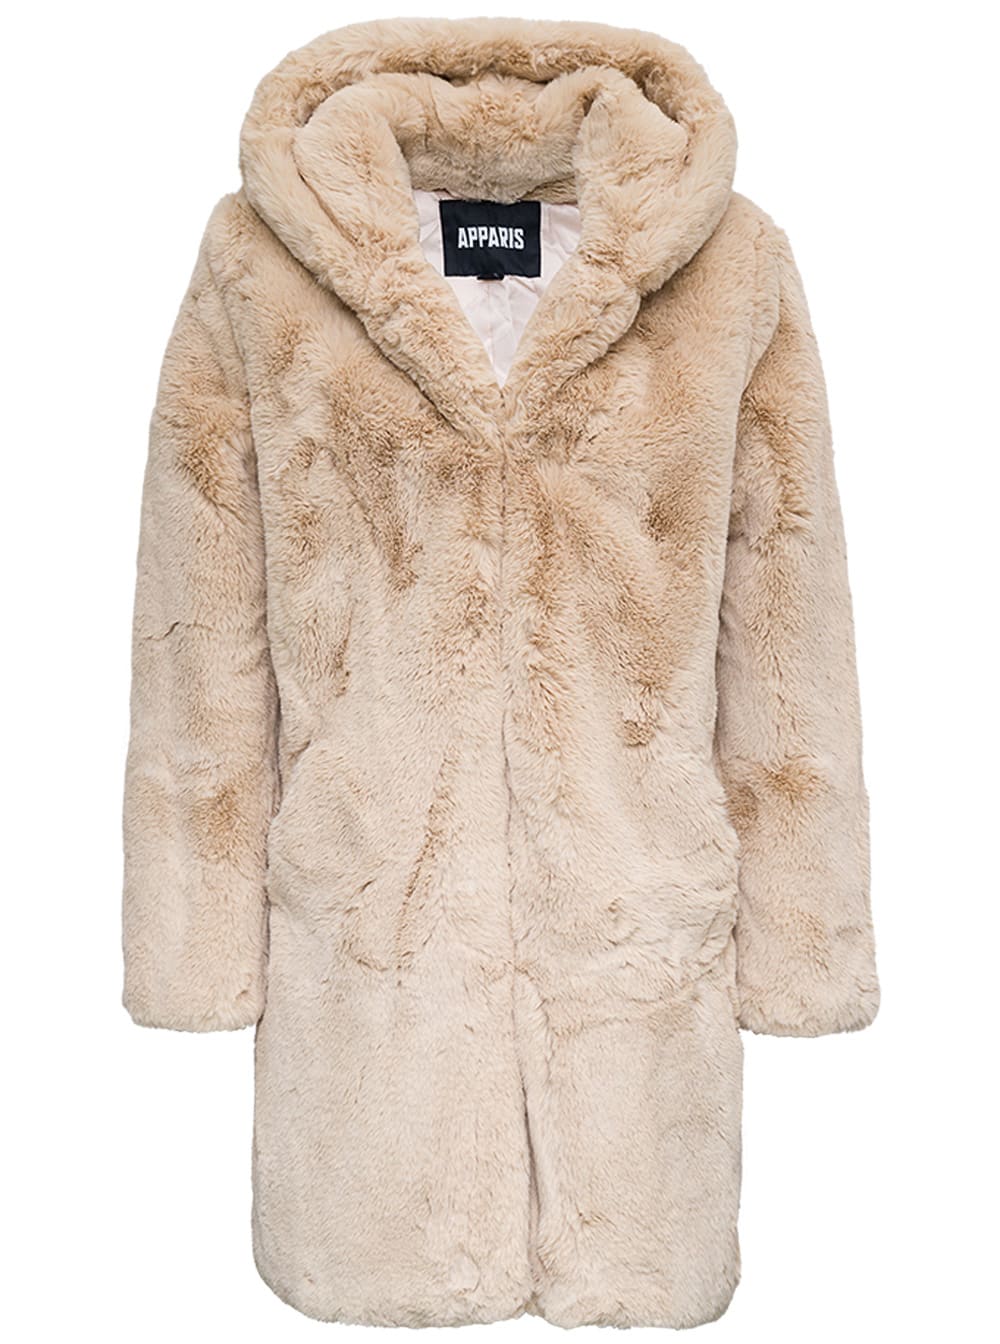 Apparis Myra Beige Ecological Fur Coat